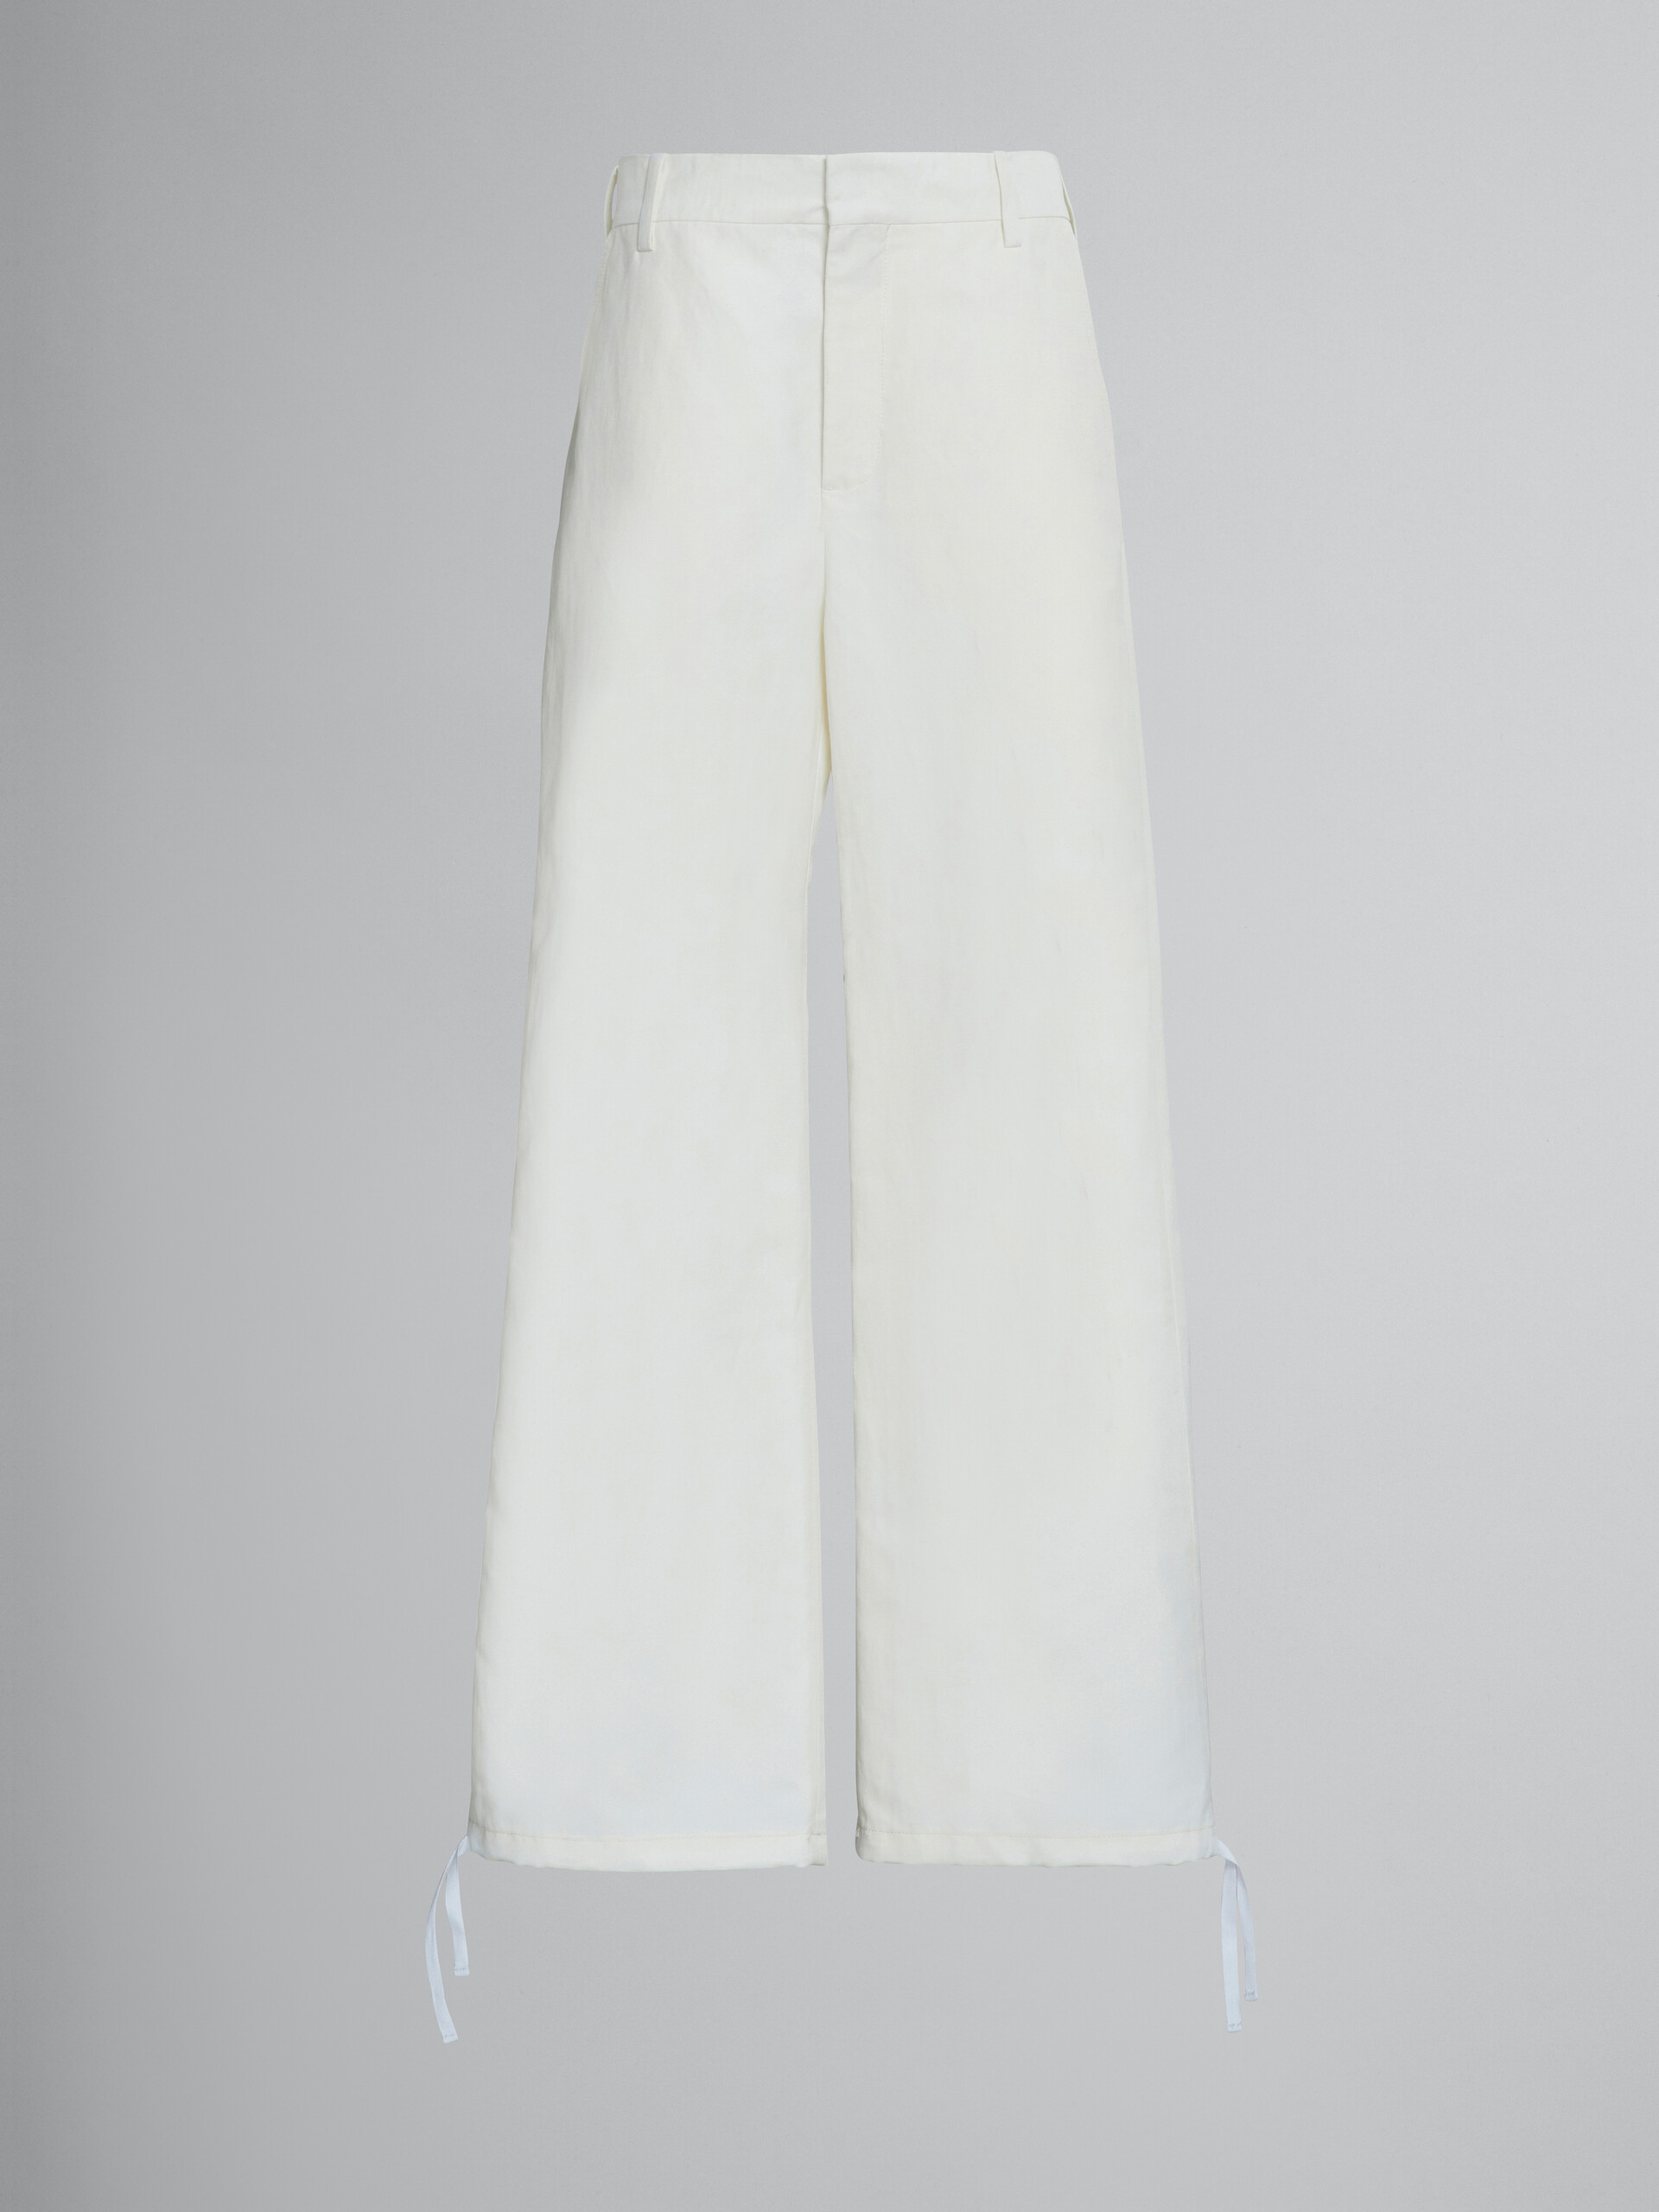 Pantaloni cargo in cotone e lino tecnico bianco - Pantaloni - Image 1